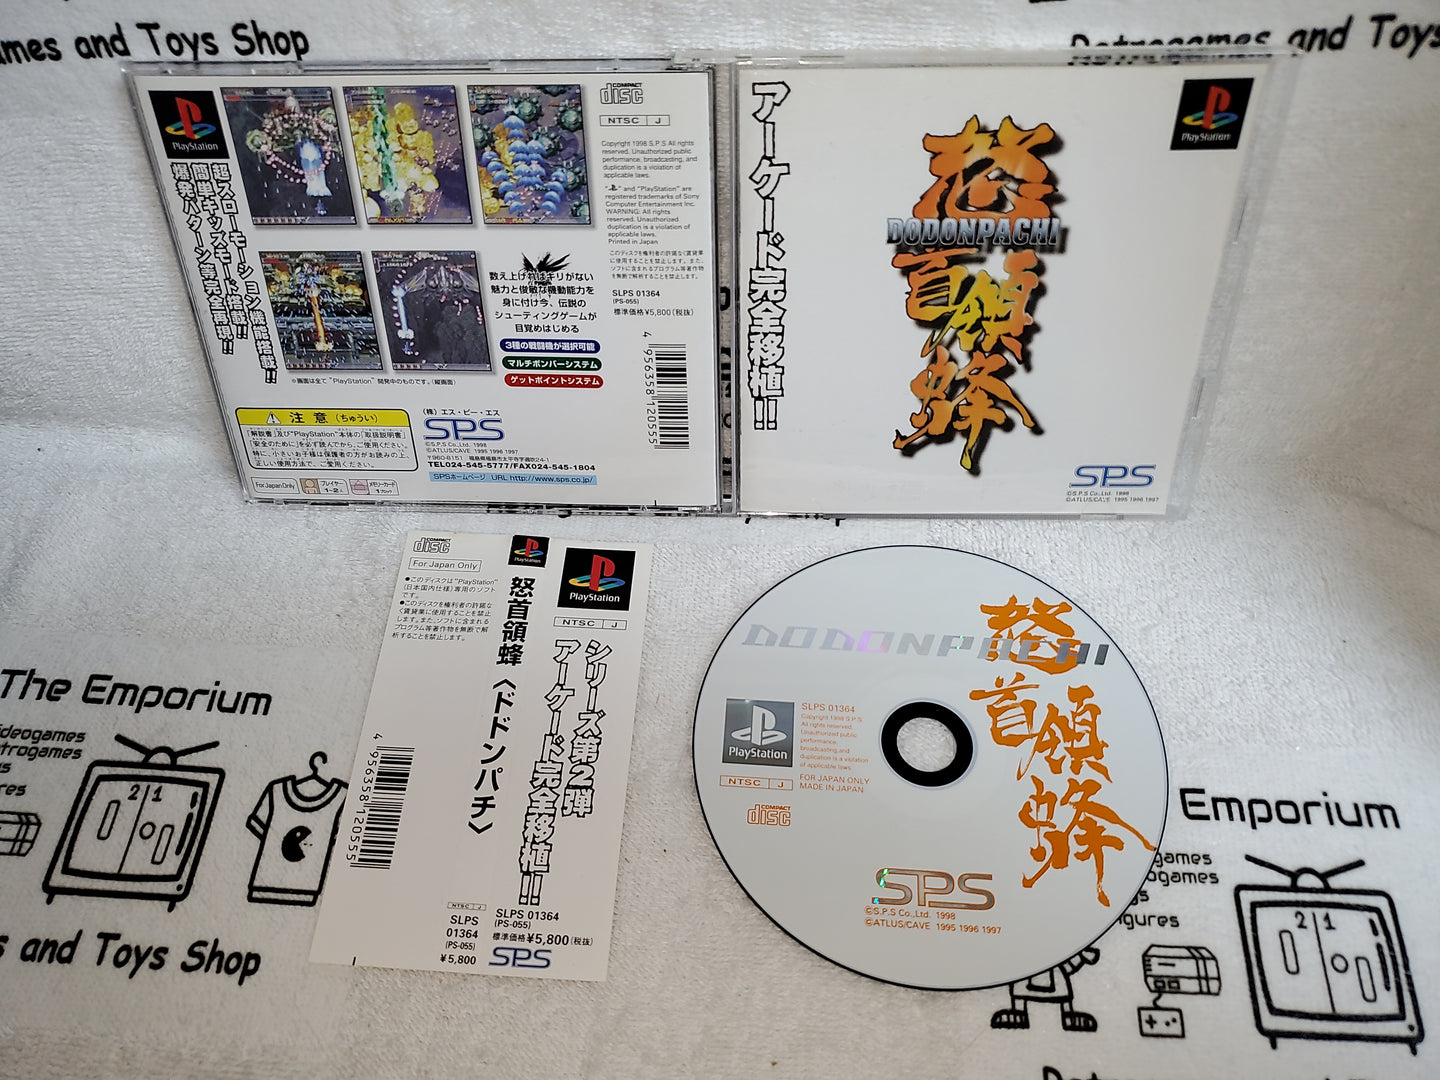 dodonpachi sony playstation ps1 japan – The Emporium RetroGames